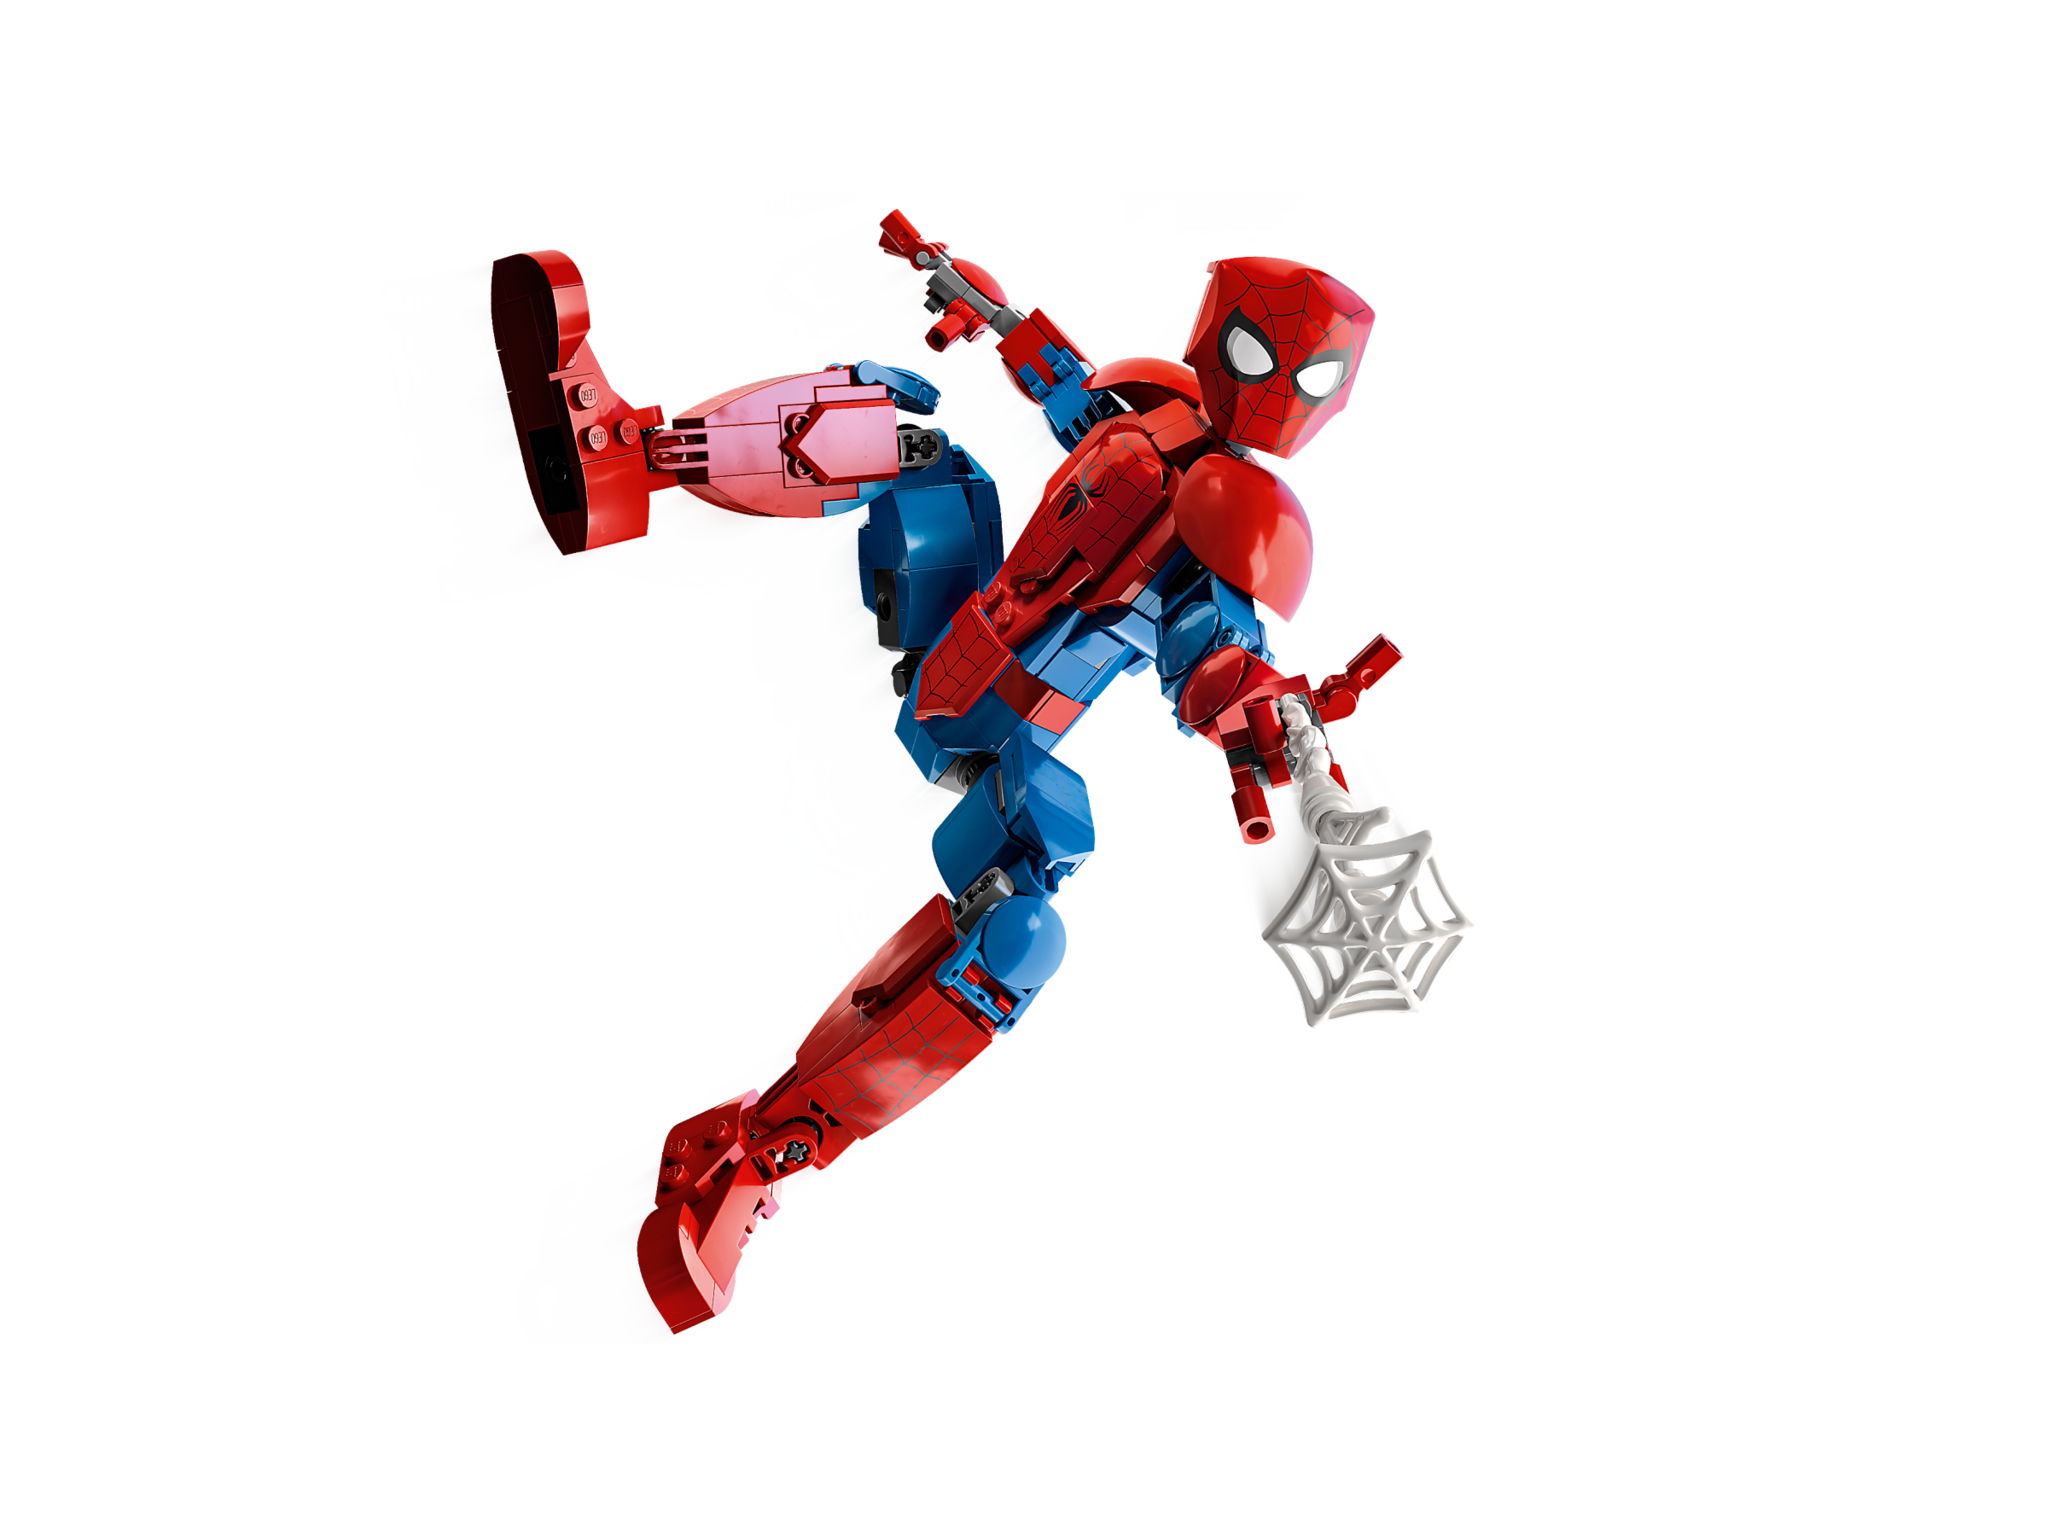 Lego Lego 76226 Marvel - Figurine de Spider-Man